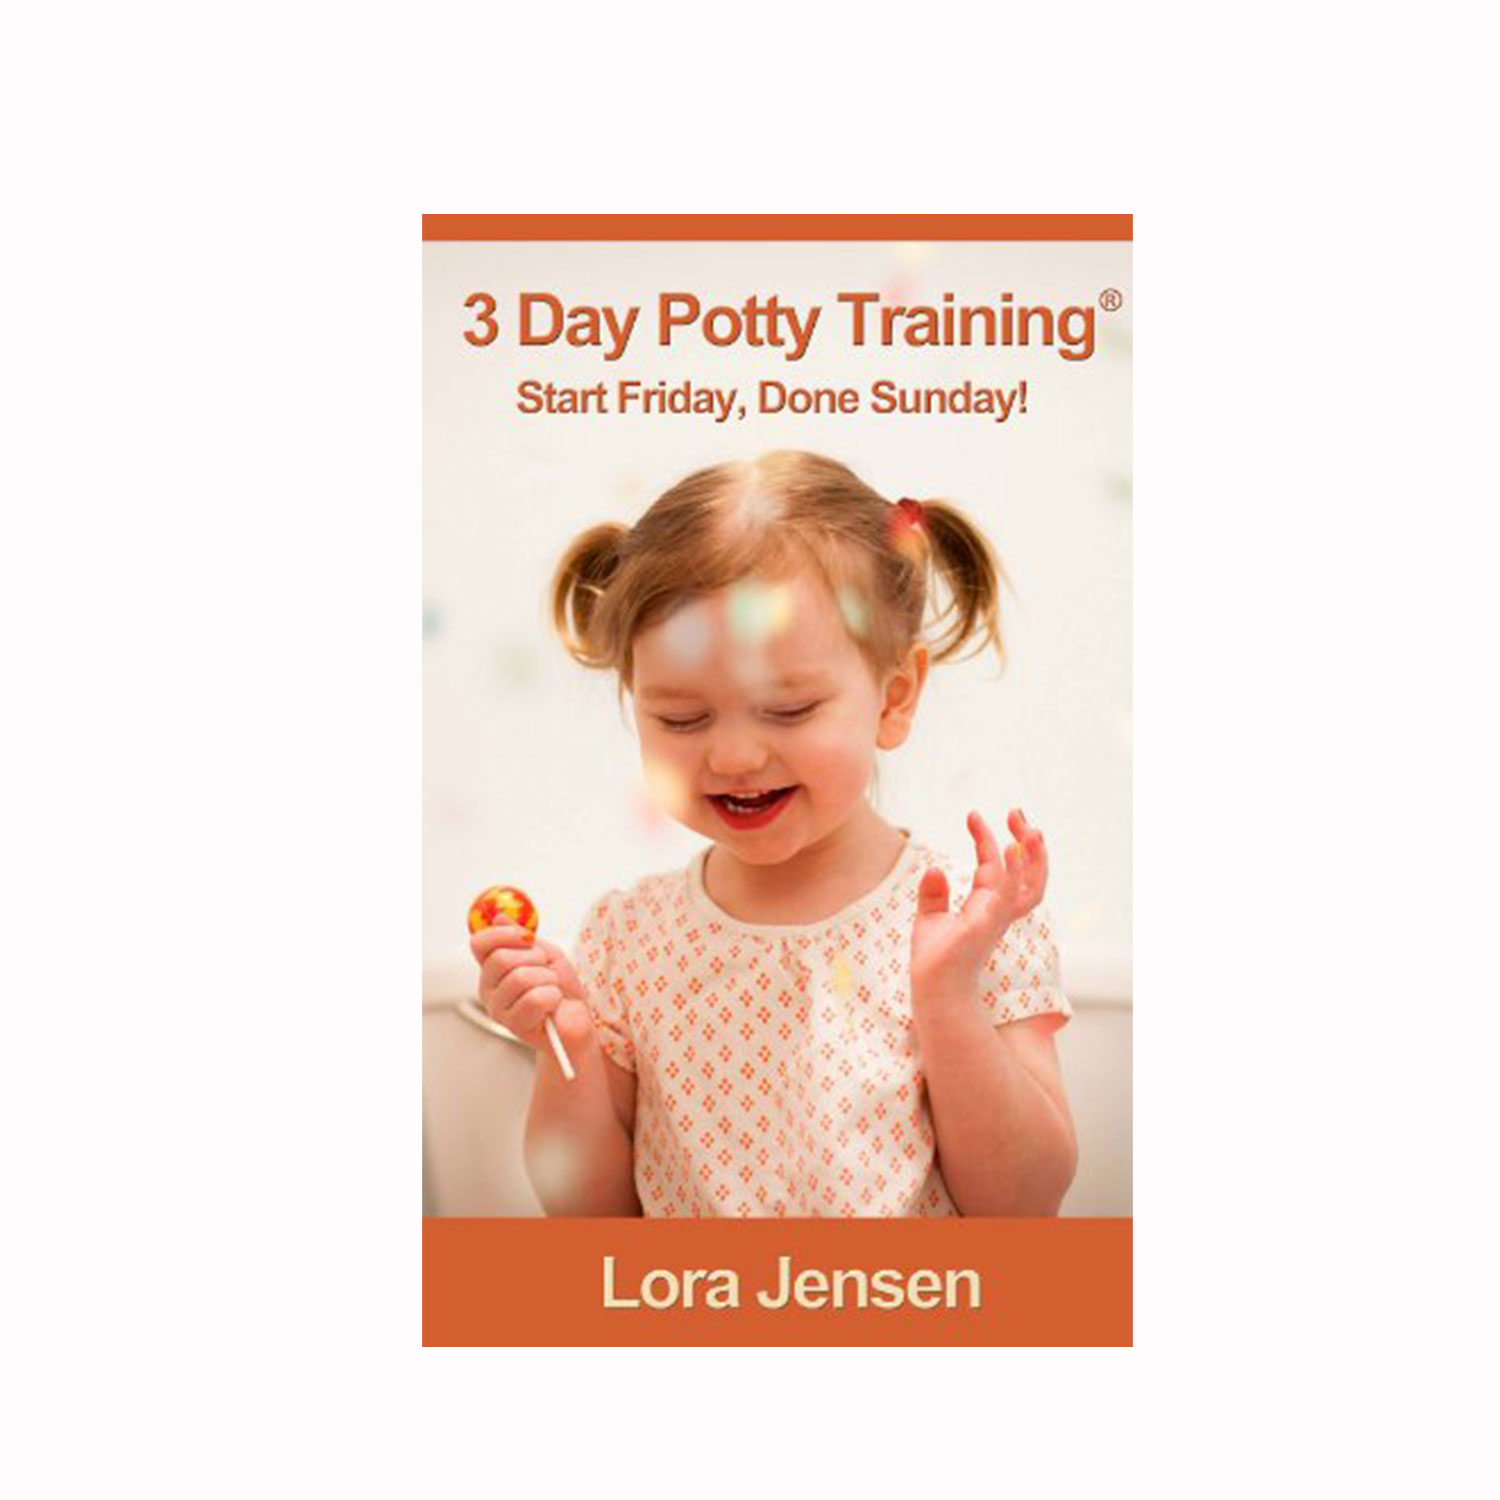 3 Day Potty Training by Lora Jensen